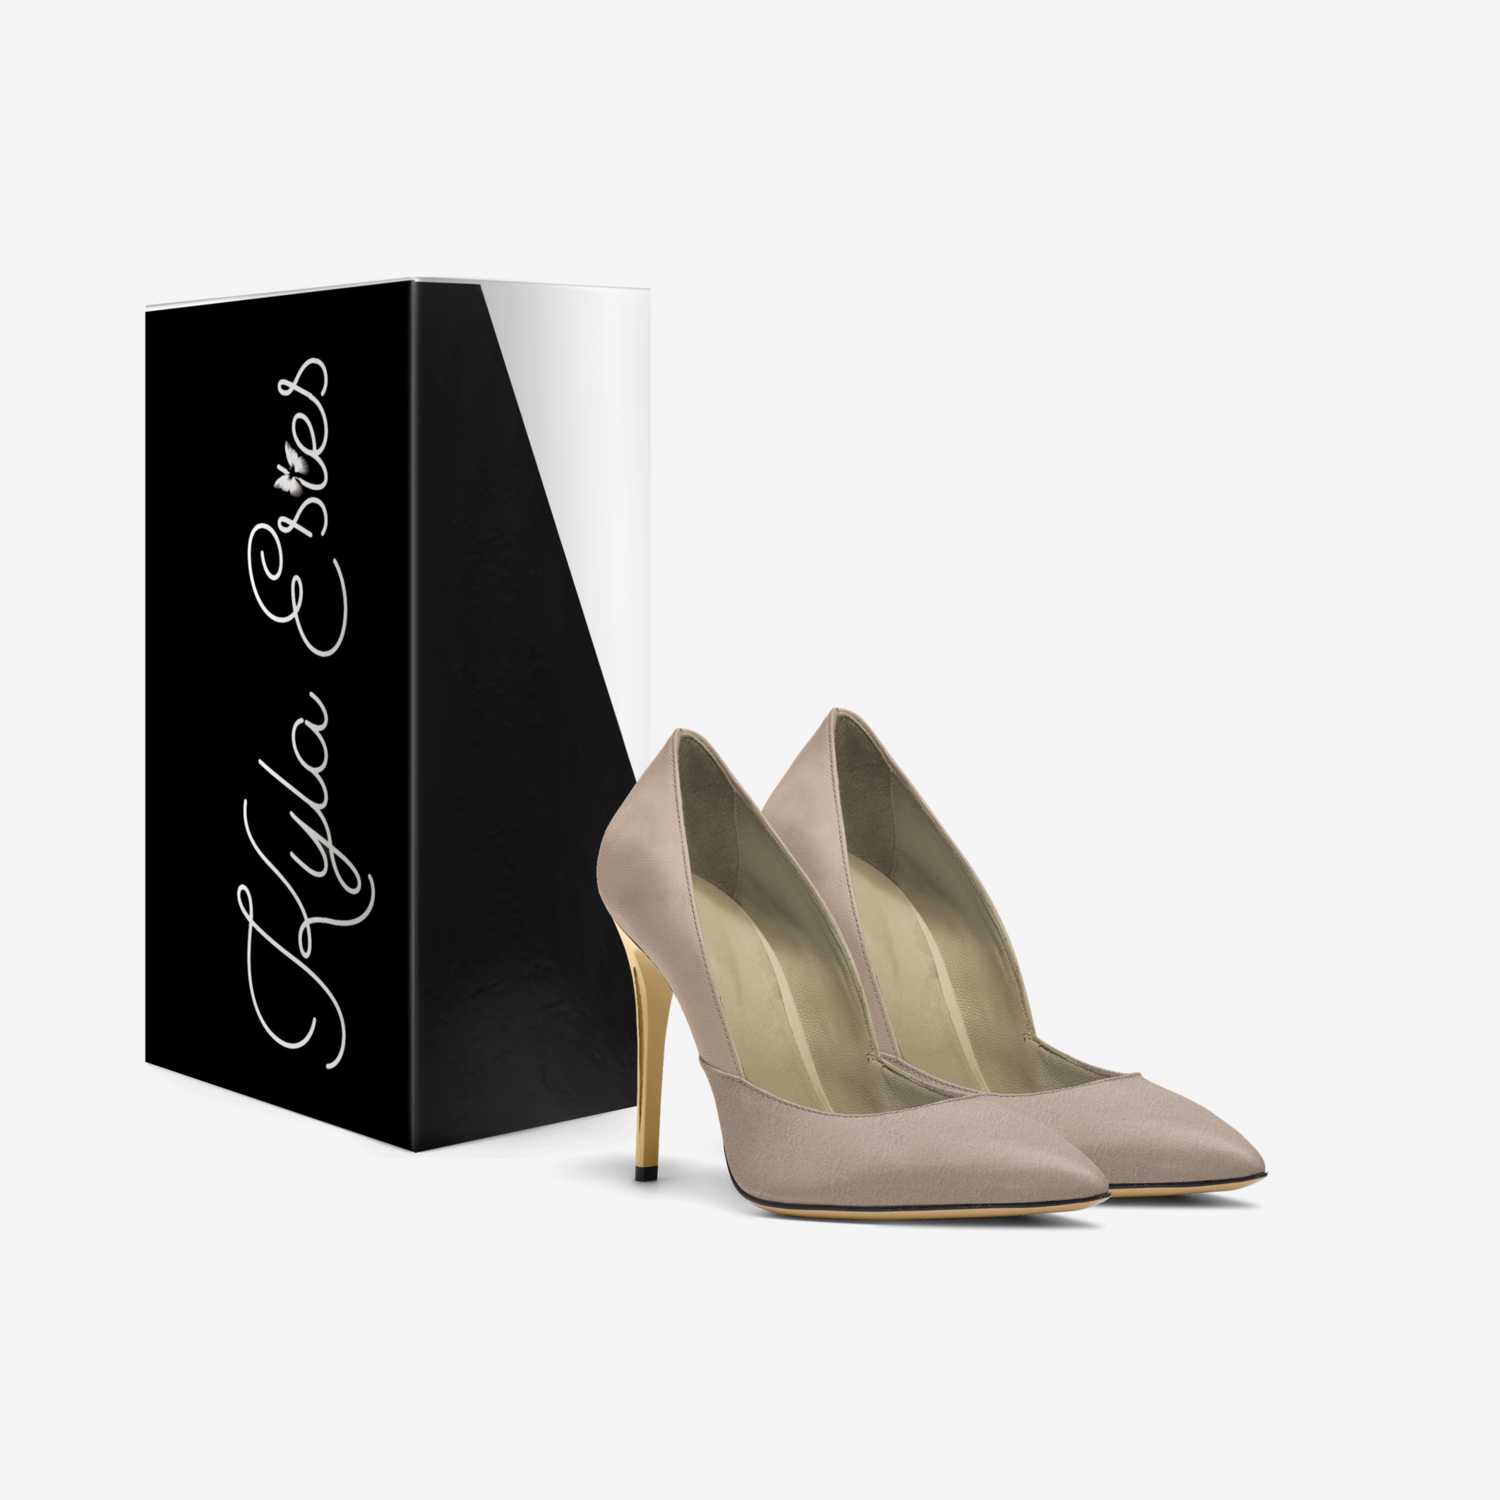 Kyla Estes custom made in Italy shoes by Kyla Estes | Box view